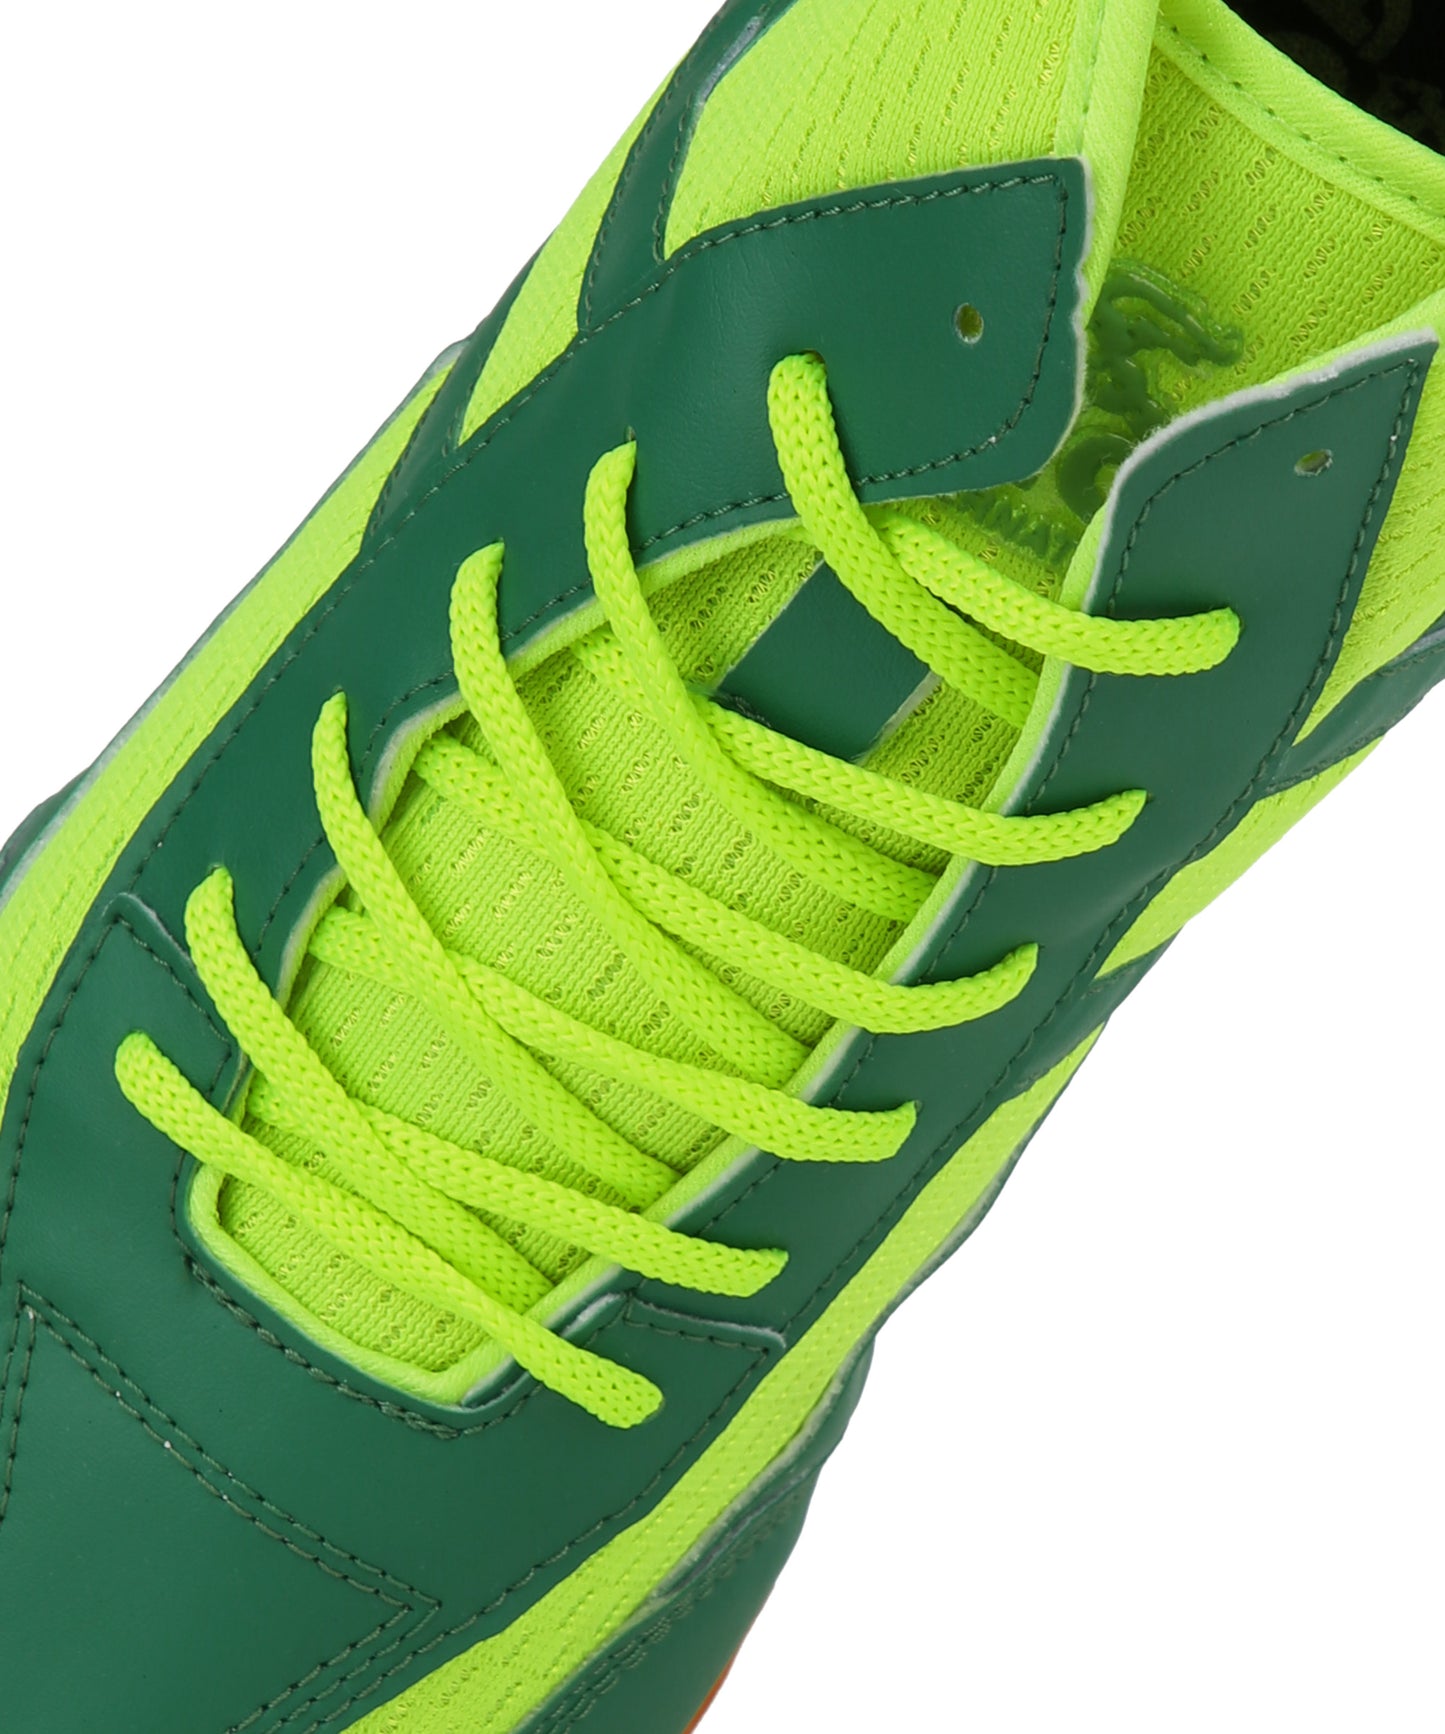 Pace International Kabaddi Shoes (B.Green/ Green)